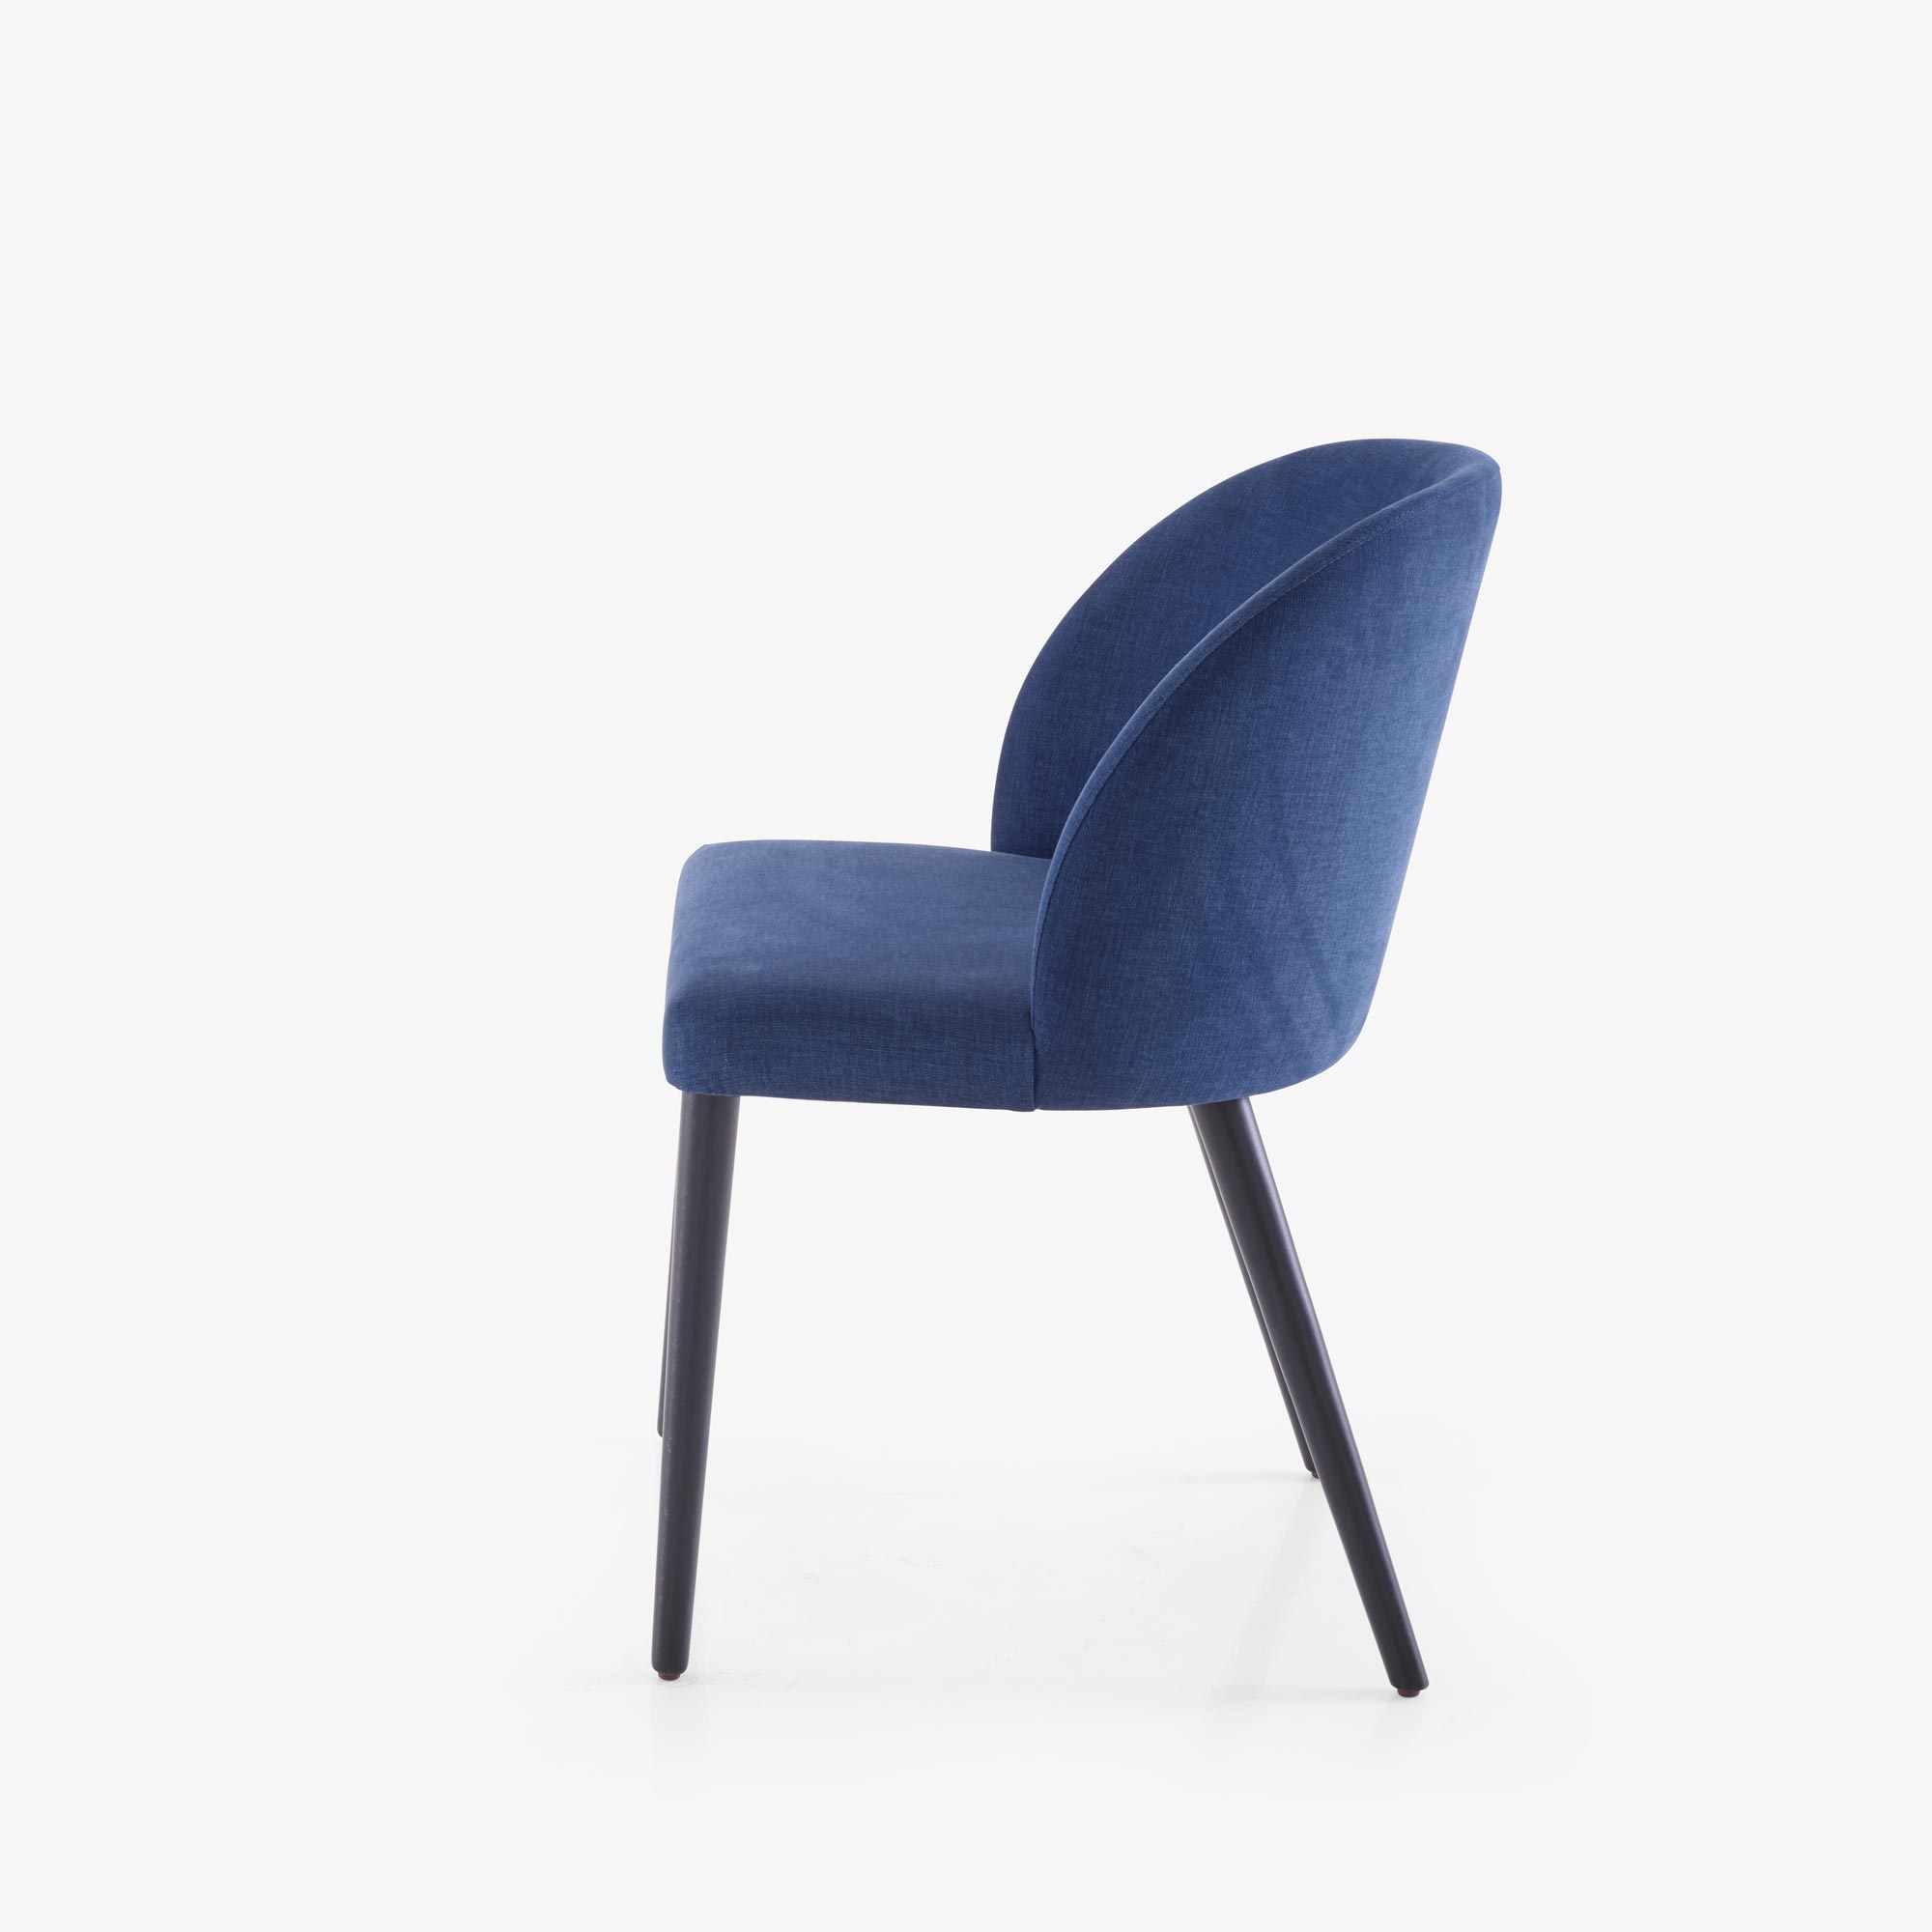 Image Chair fabric-bleu nuit (midnight blue)  3